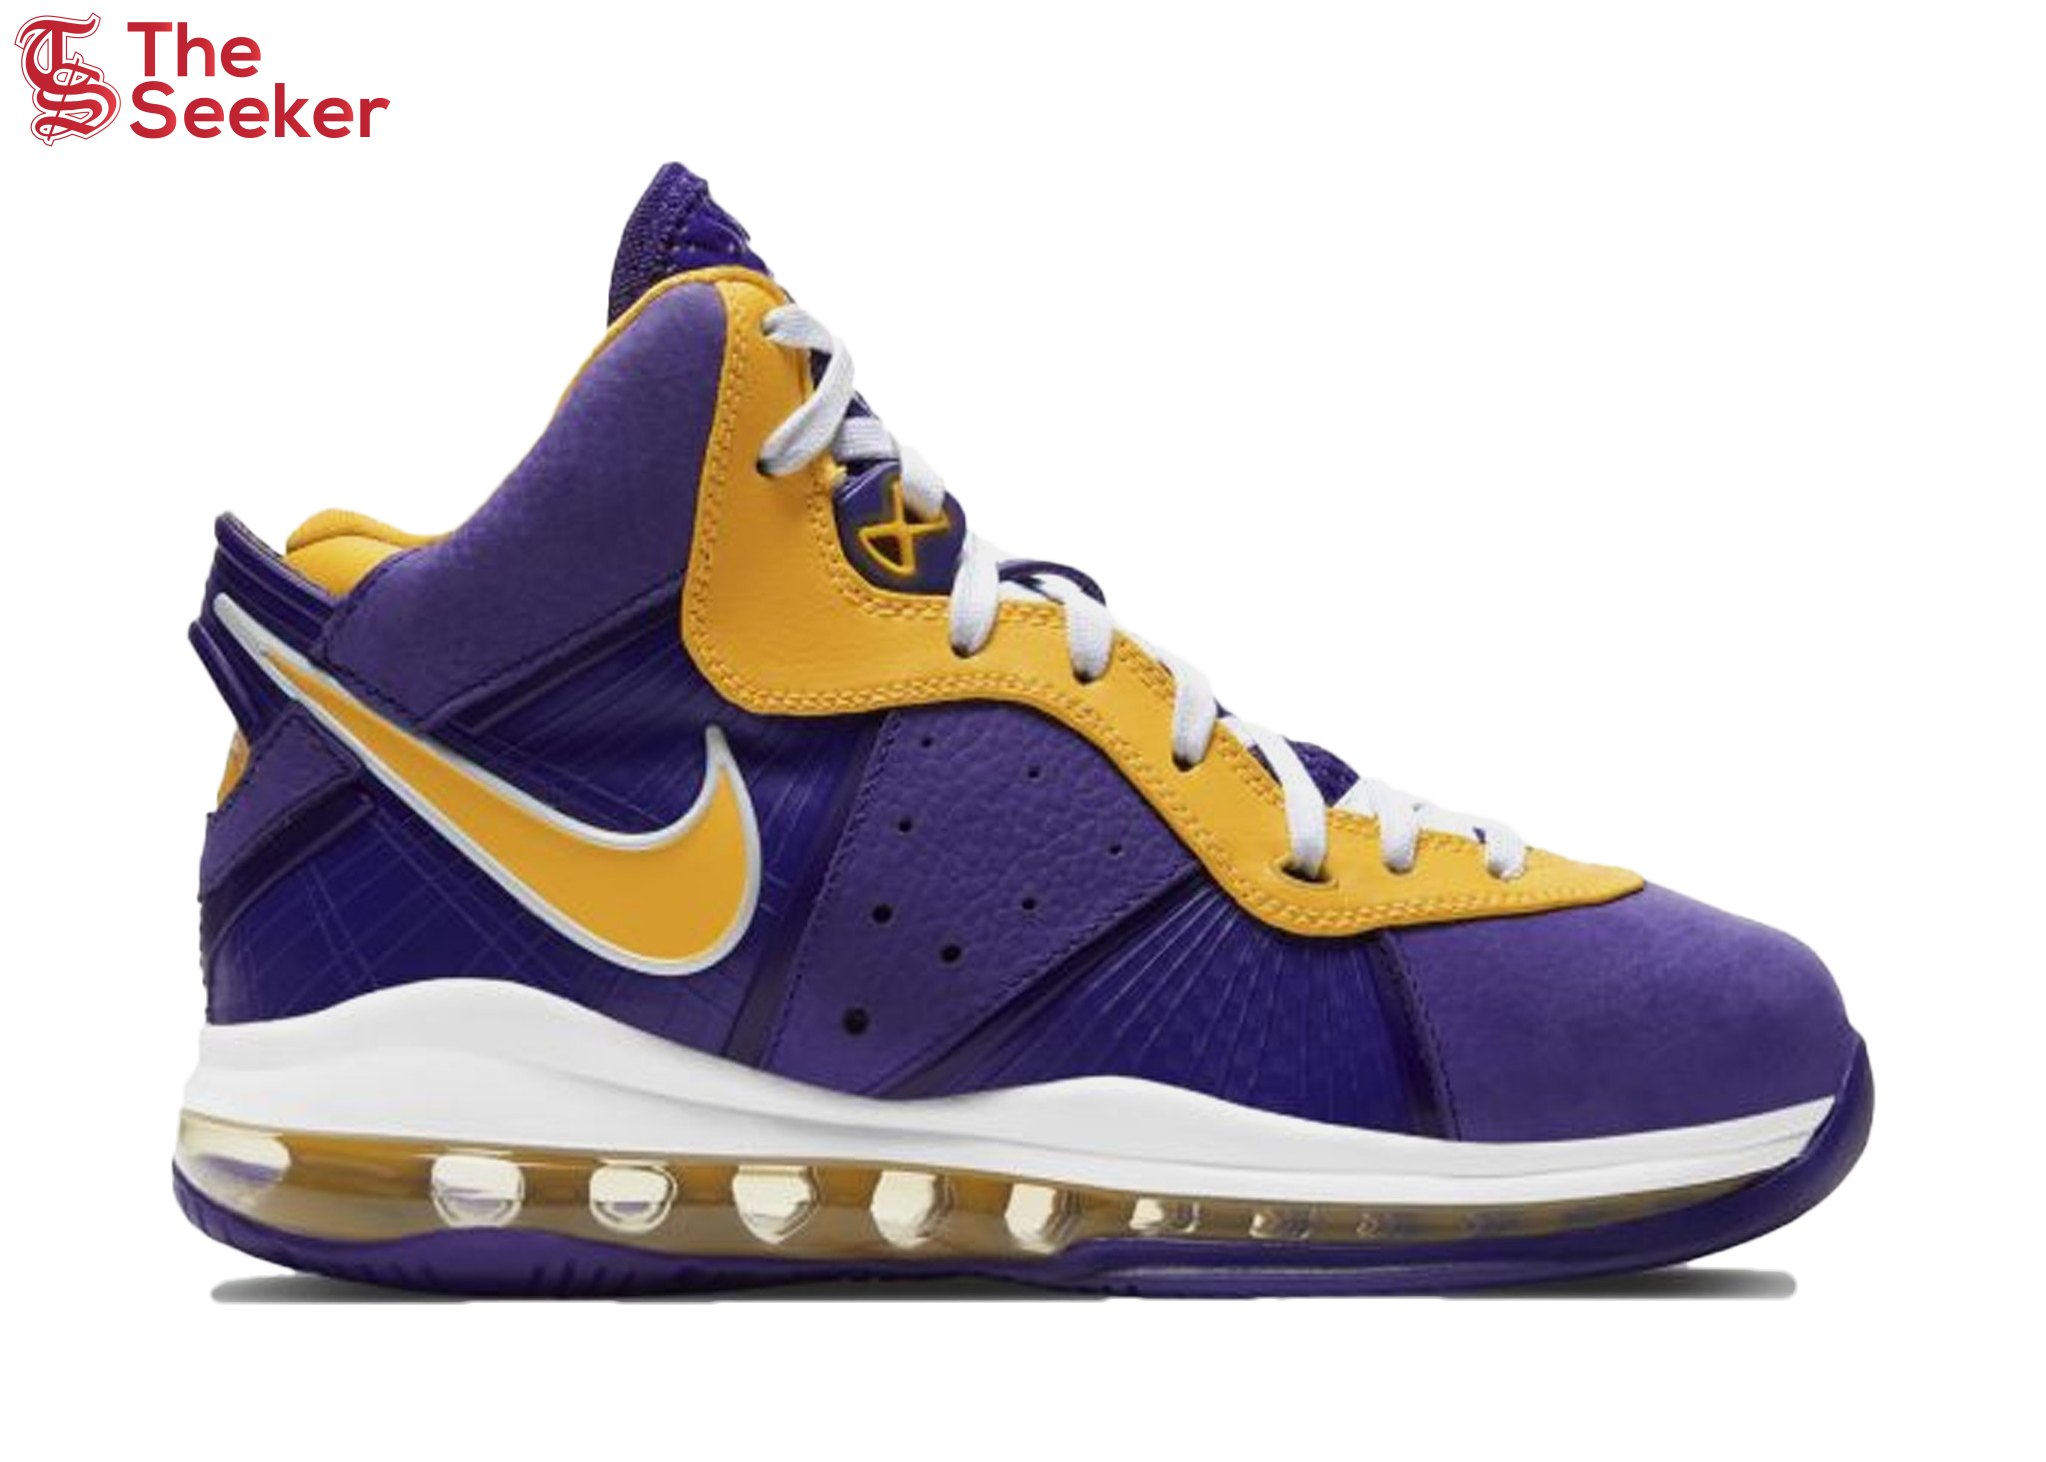 Nike LeBron 8 Lakers (GS)